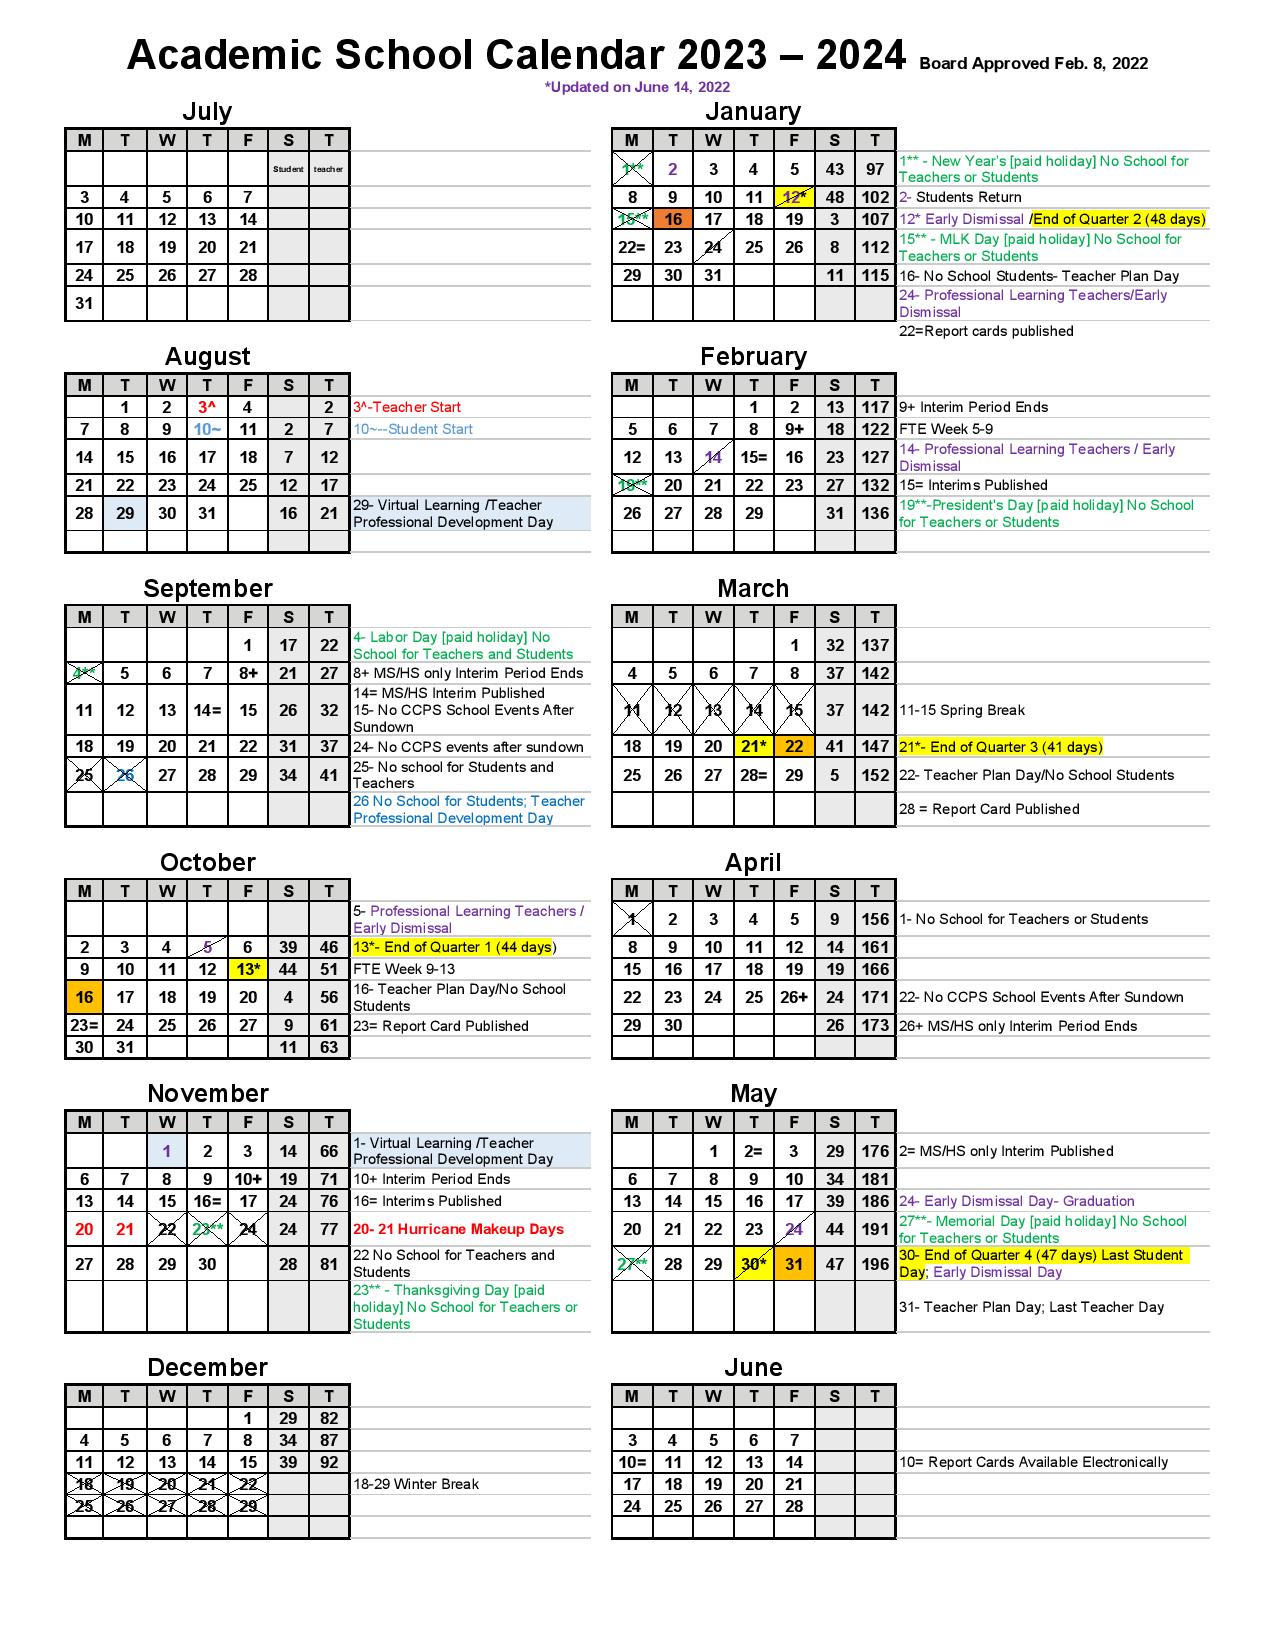 Collier County Public Schools Calendar Holidays 2023 2024